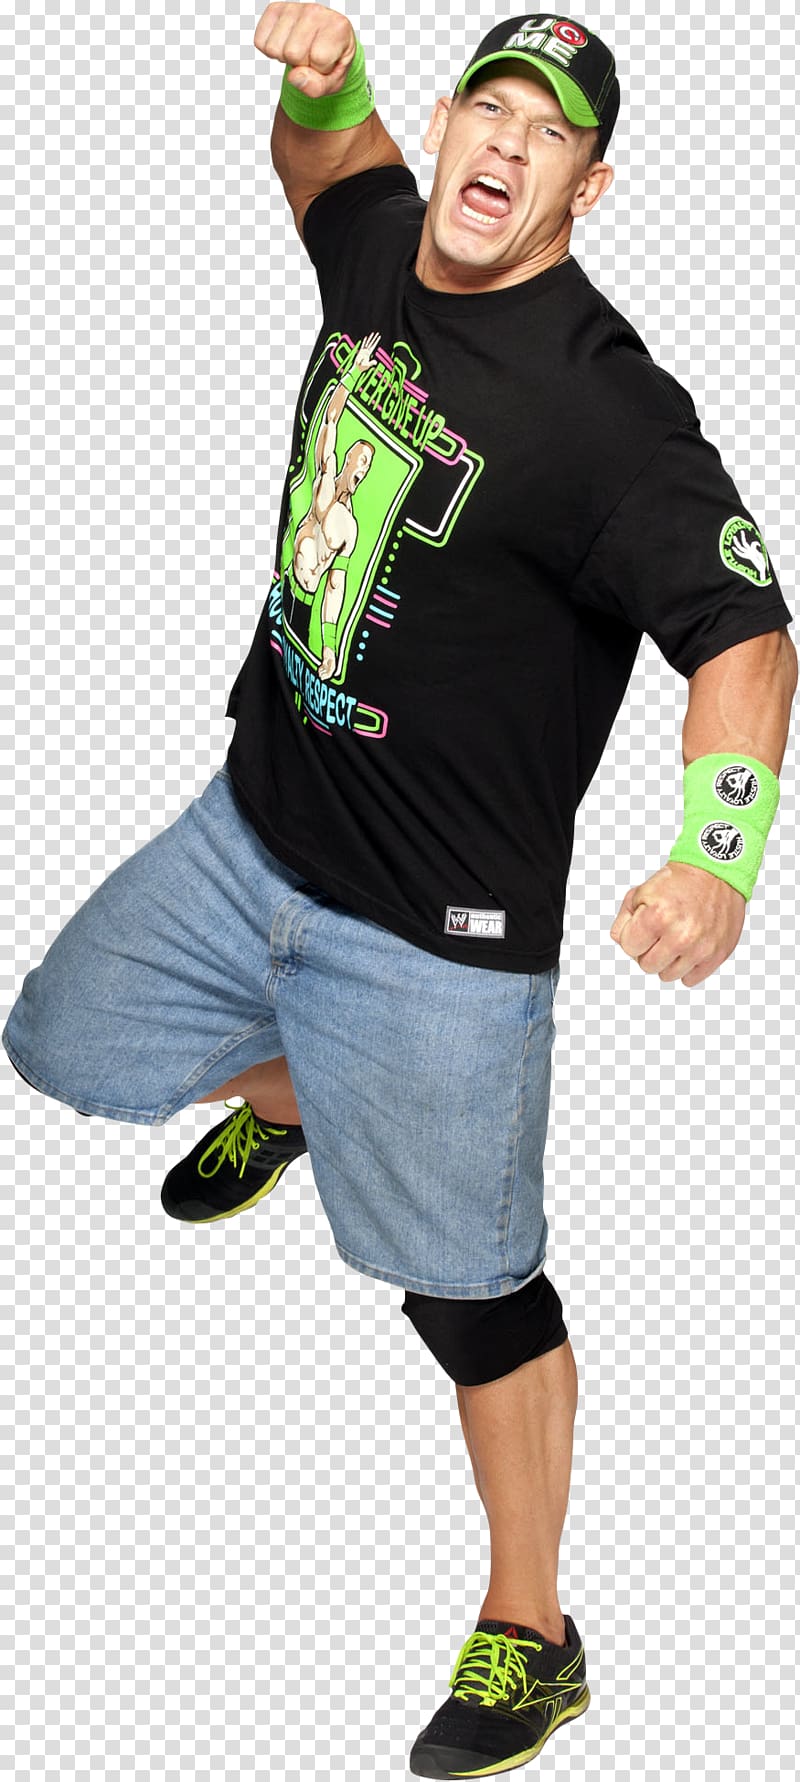 John Cena WWE Superstars WWE Championship SummerSlam, john cena transparent background PNG clipart